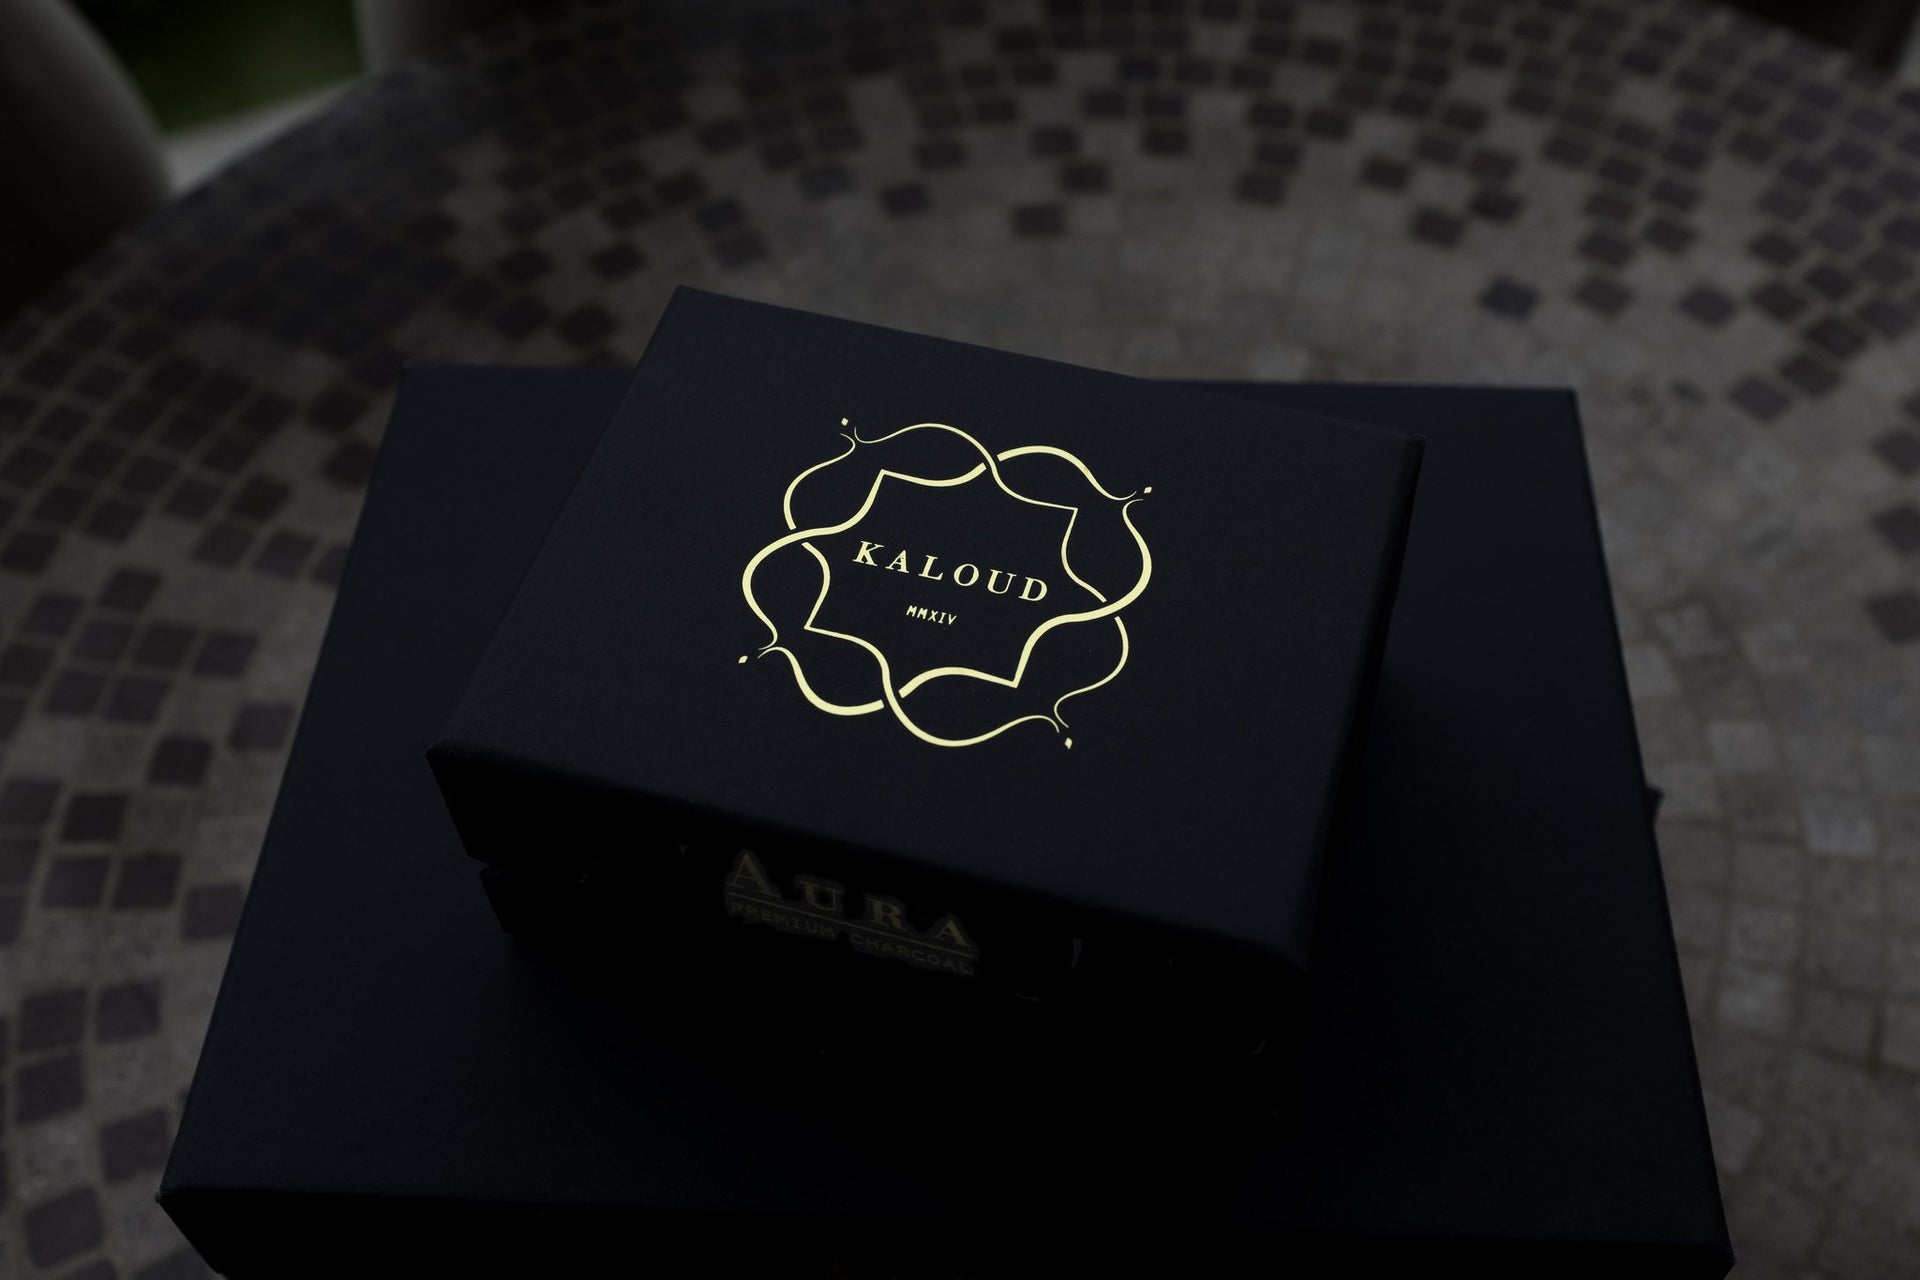 Kaloud Aura Premium Charcoal - 12 pieces - TheHookah.com